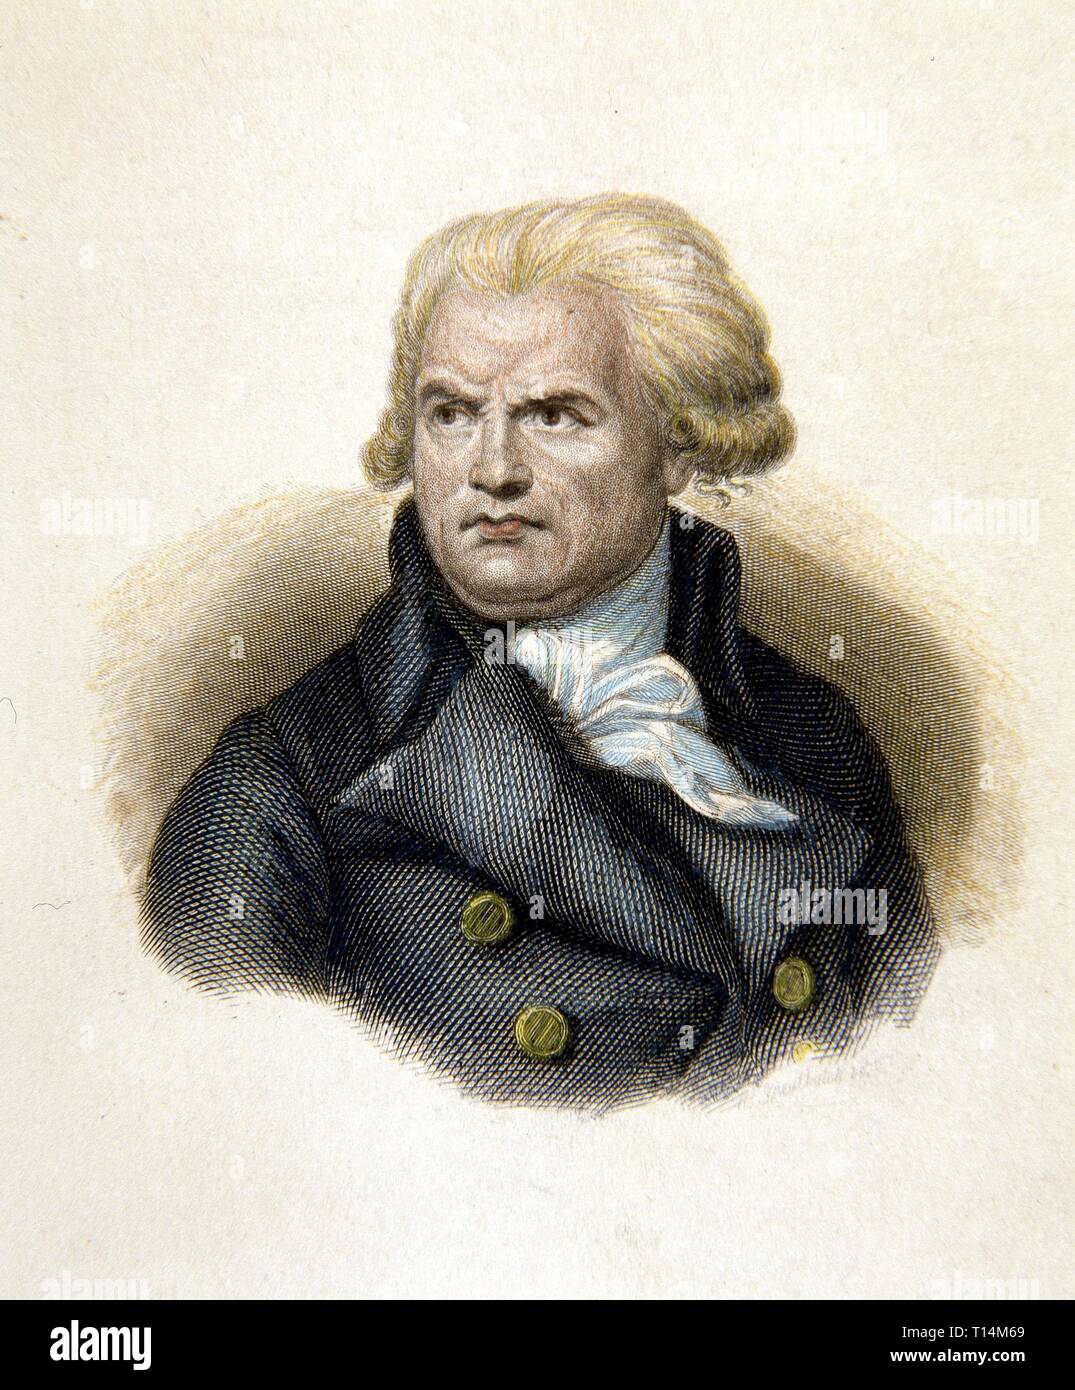 DANTON, GEORGES POLITICO FRANCES. 1759-1794 GRABADO COLOREADO DE FREDERICK SHOBERI. AÑO 1838. Author: FREDERIC SHOBERL (1775-1853). Stock Photo